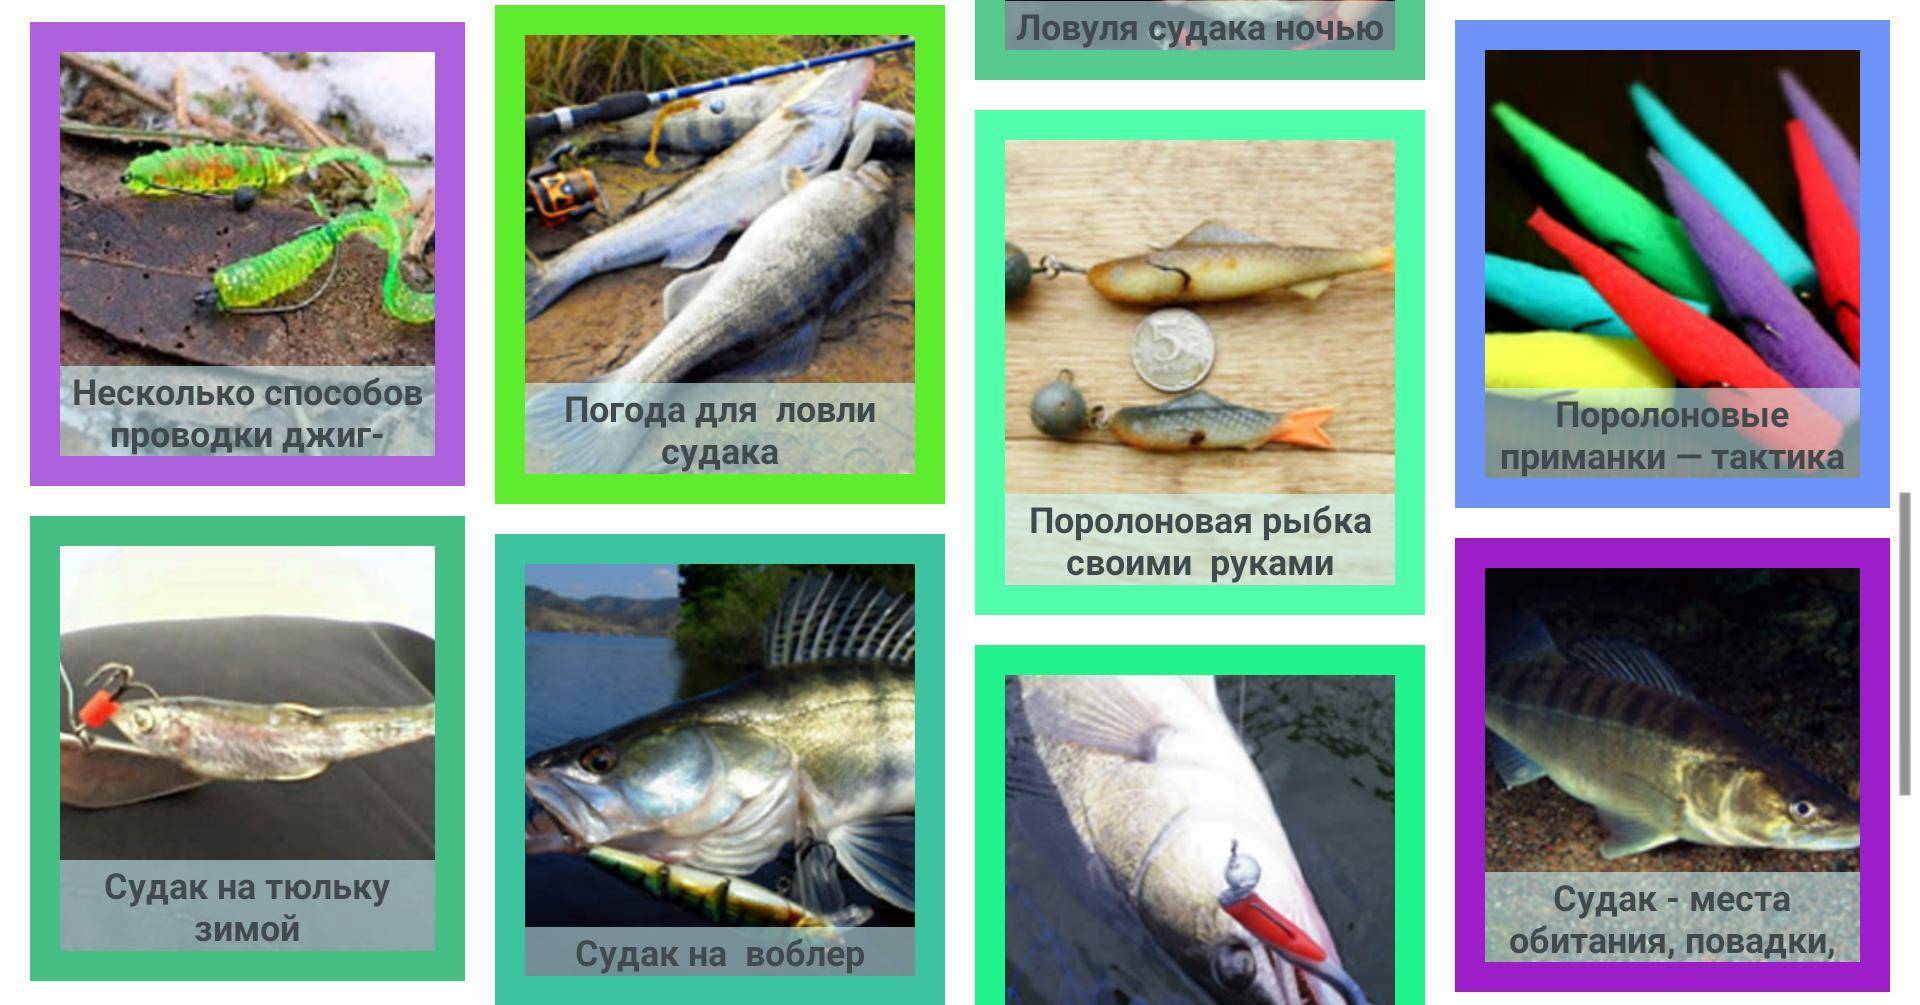 Судак: рыба судак фото и описание, нерест, способы ловли, образ жизни, приманки, прикормки, блюда из судака